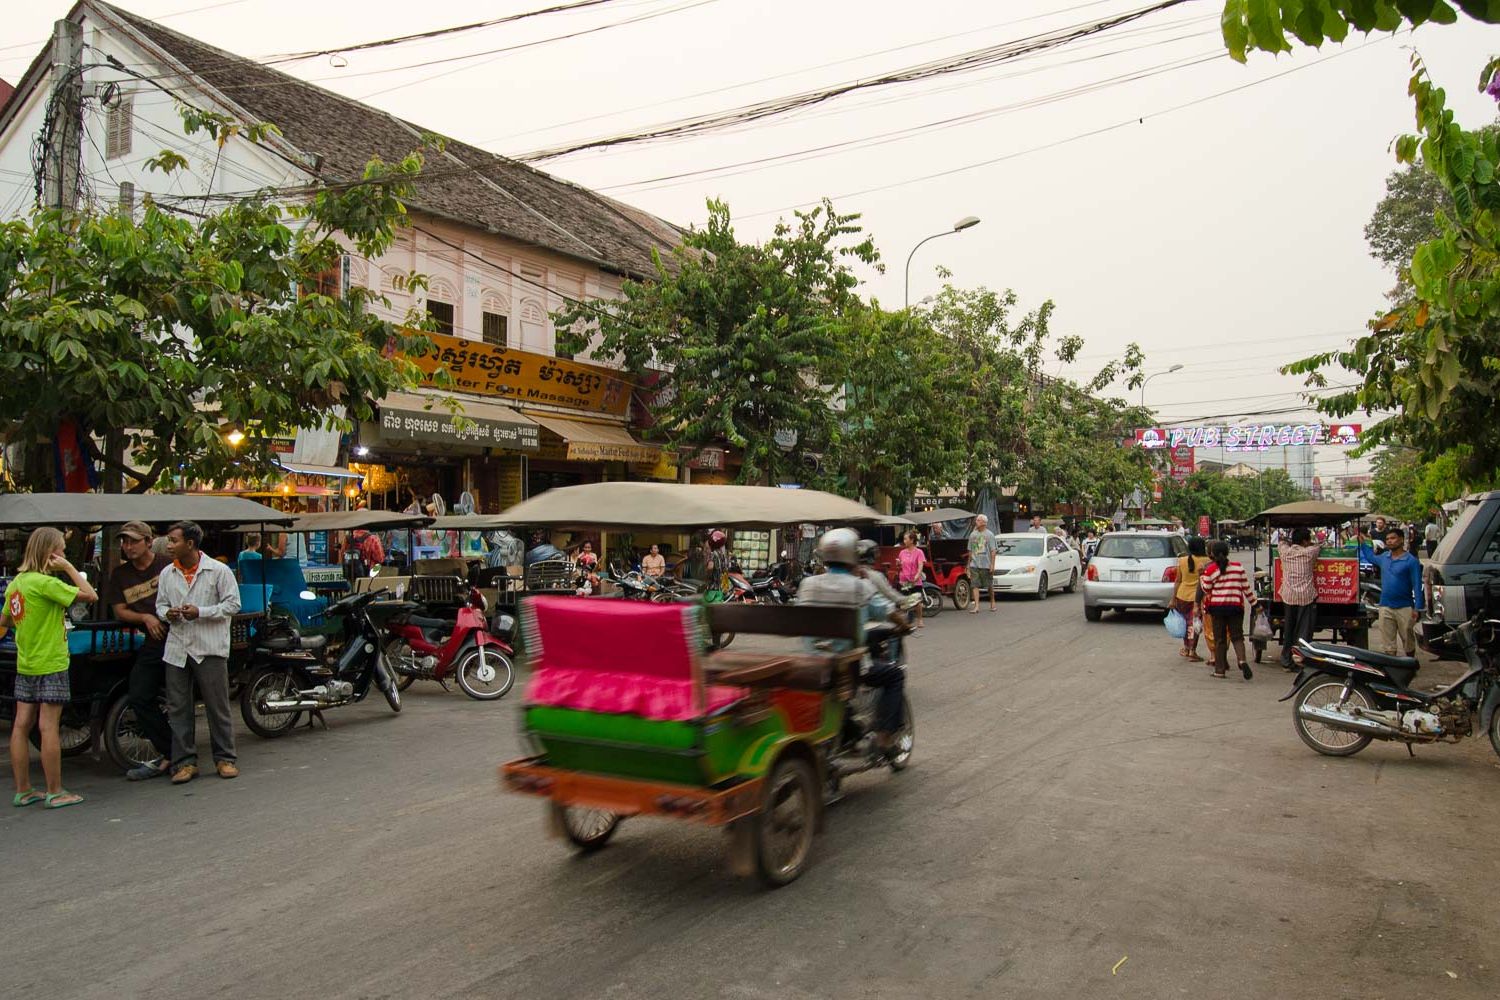 A tuk tuk speeding through the busy pub street in Siem Reap, Cambodia.